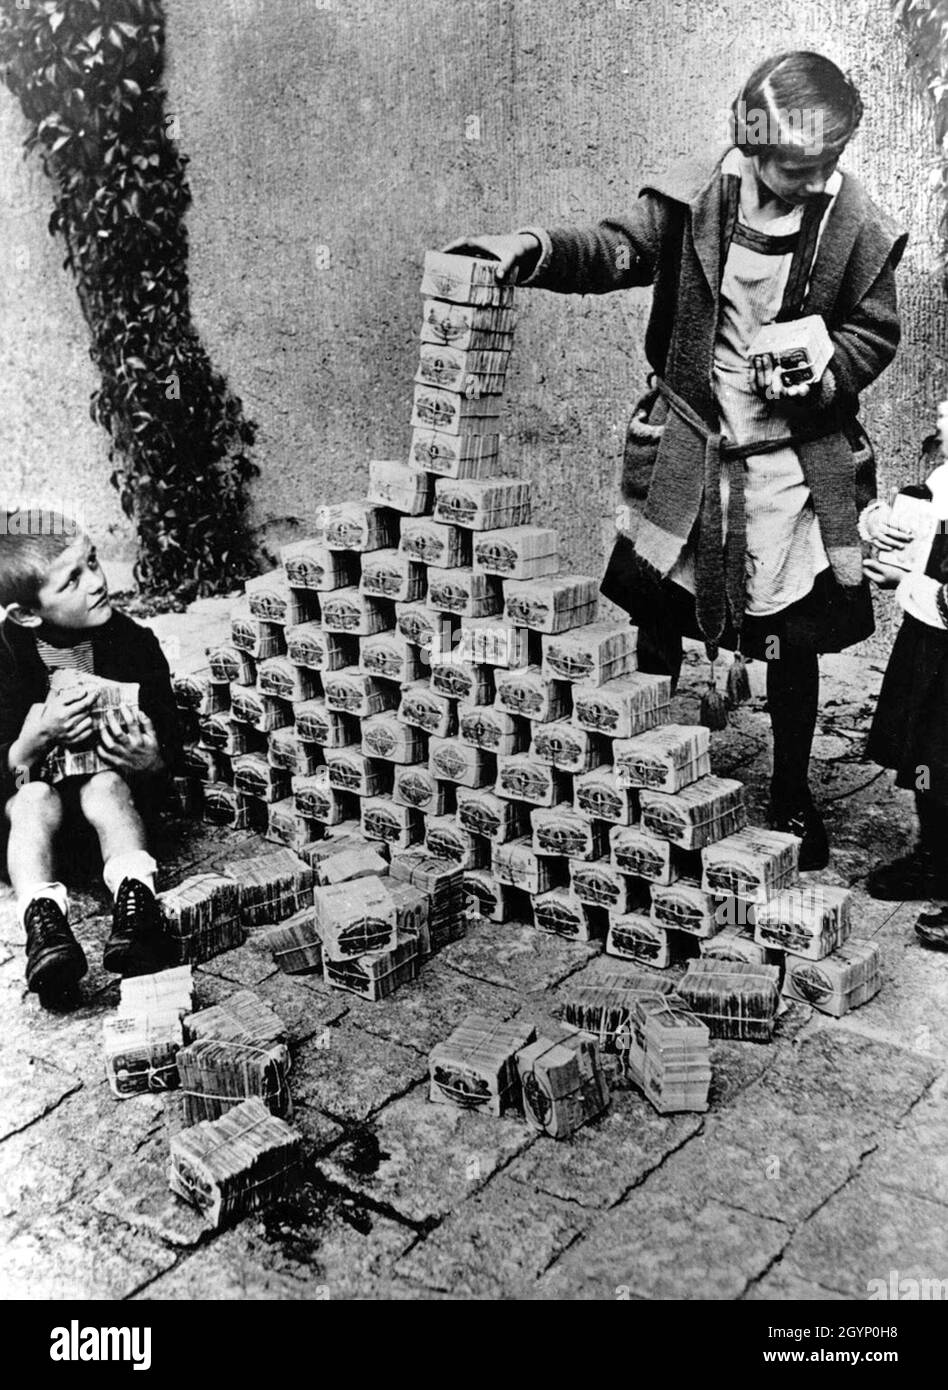 Children using blocks of worthless money like building blocks to build a castle. Stock Photo